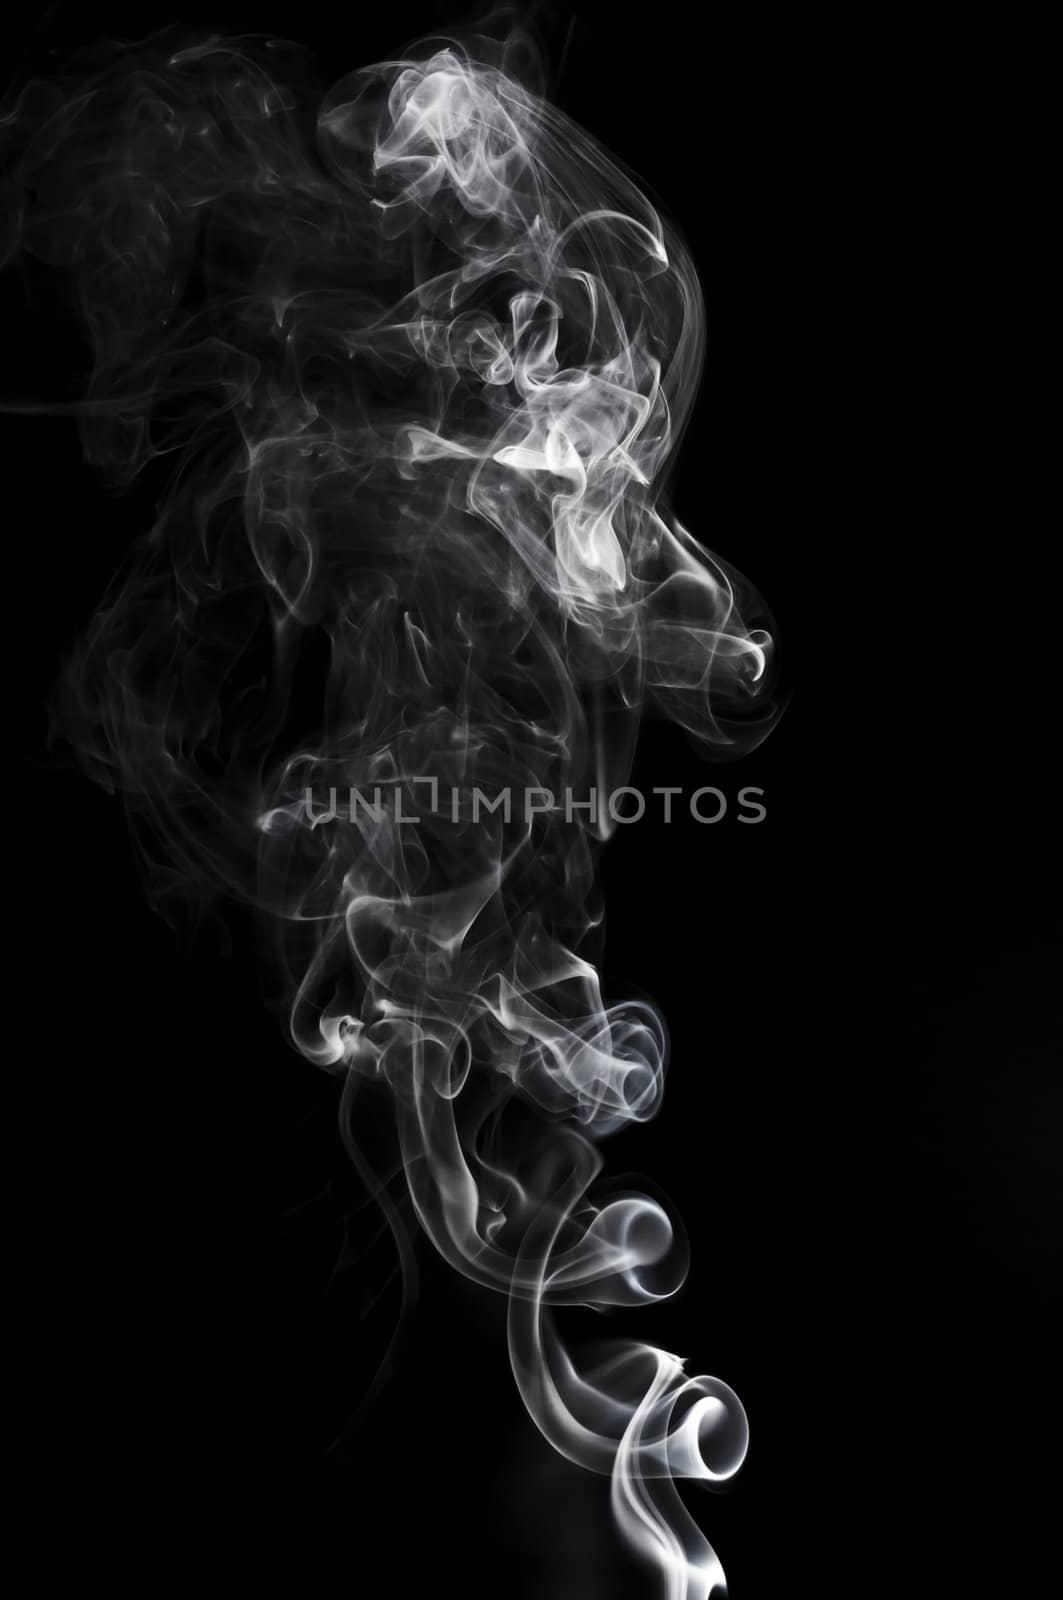 Abstract smoke isolated on black